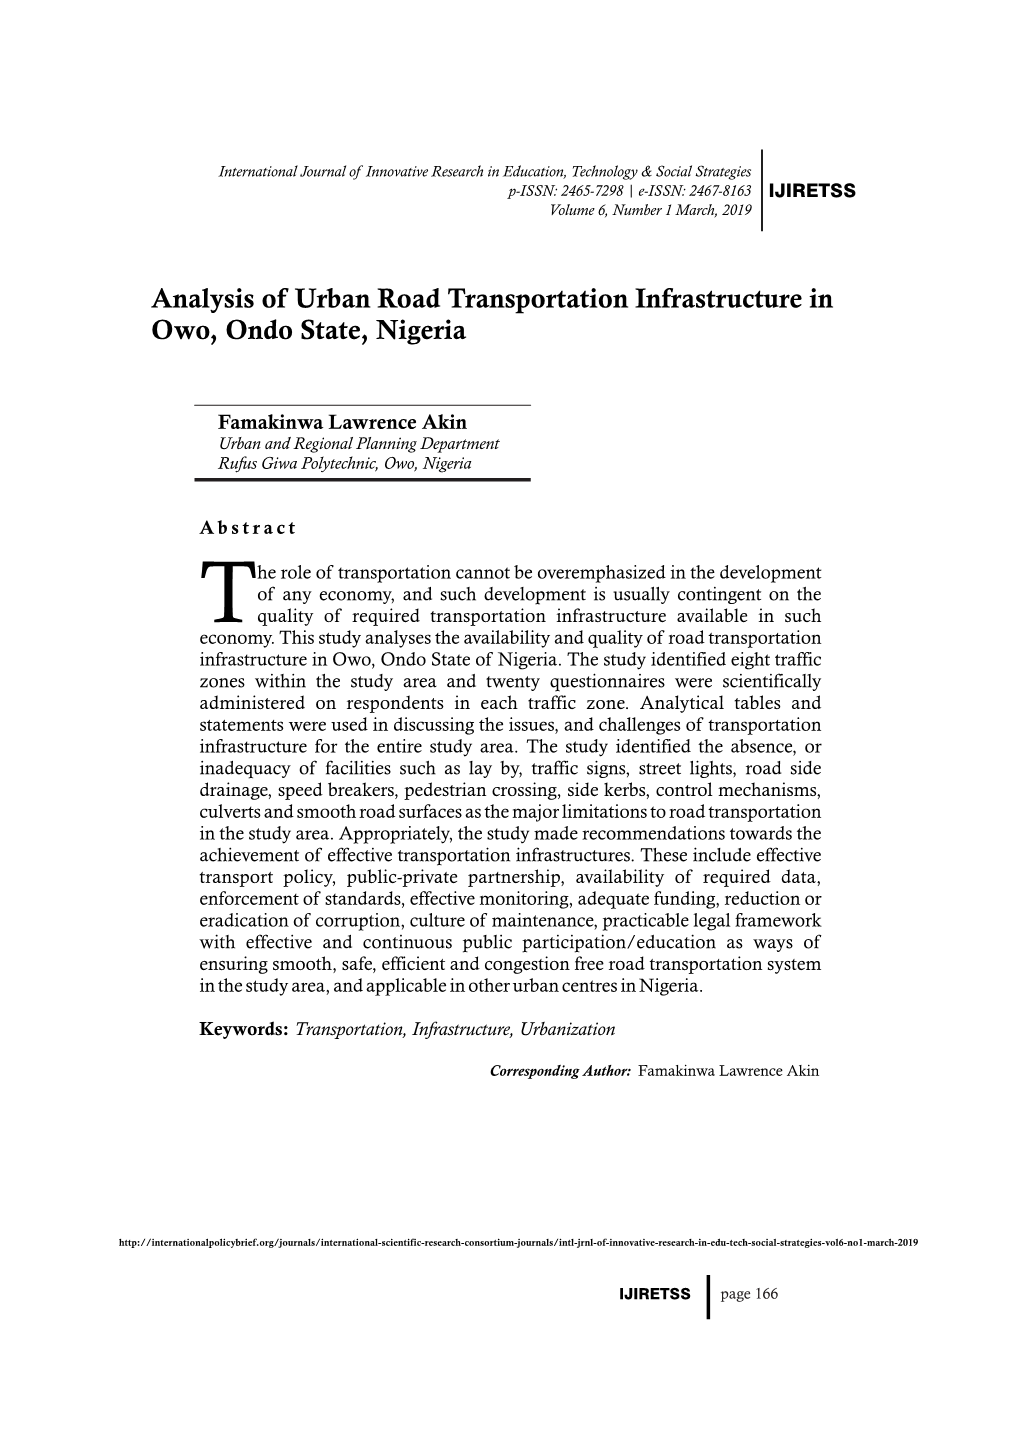 Analysis of Urban Road Transportation Infrastructure in Owo, Ondo State, Nigeria